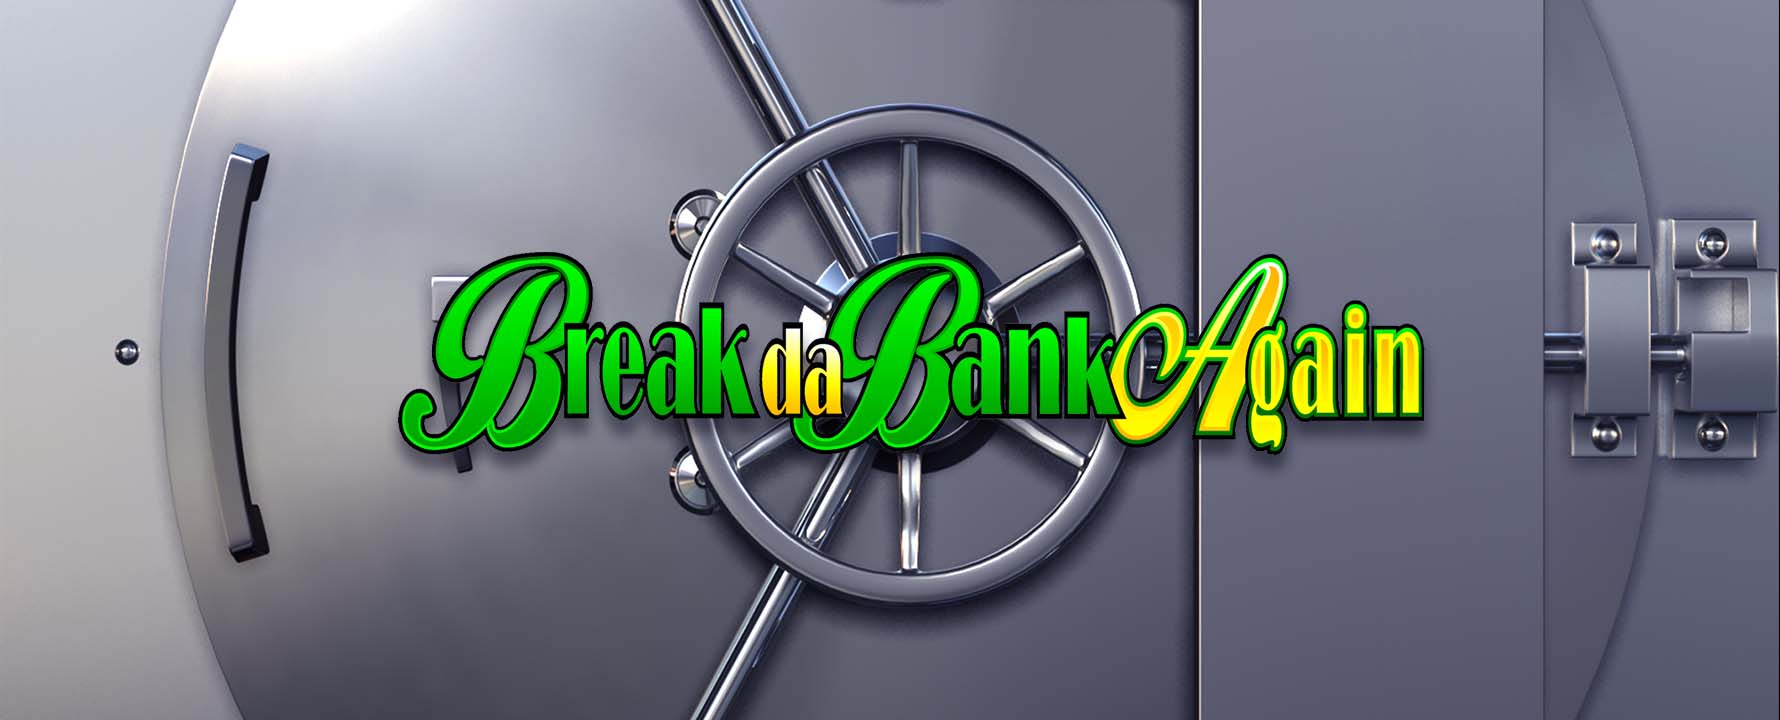 Presenting Break Da Bank Again Online Slot from MGS